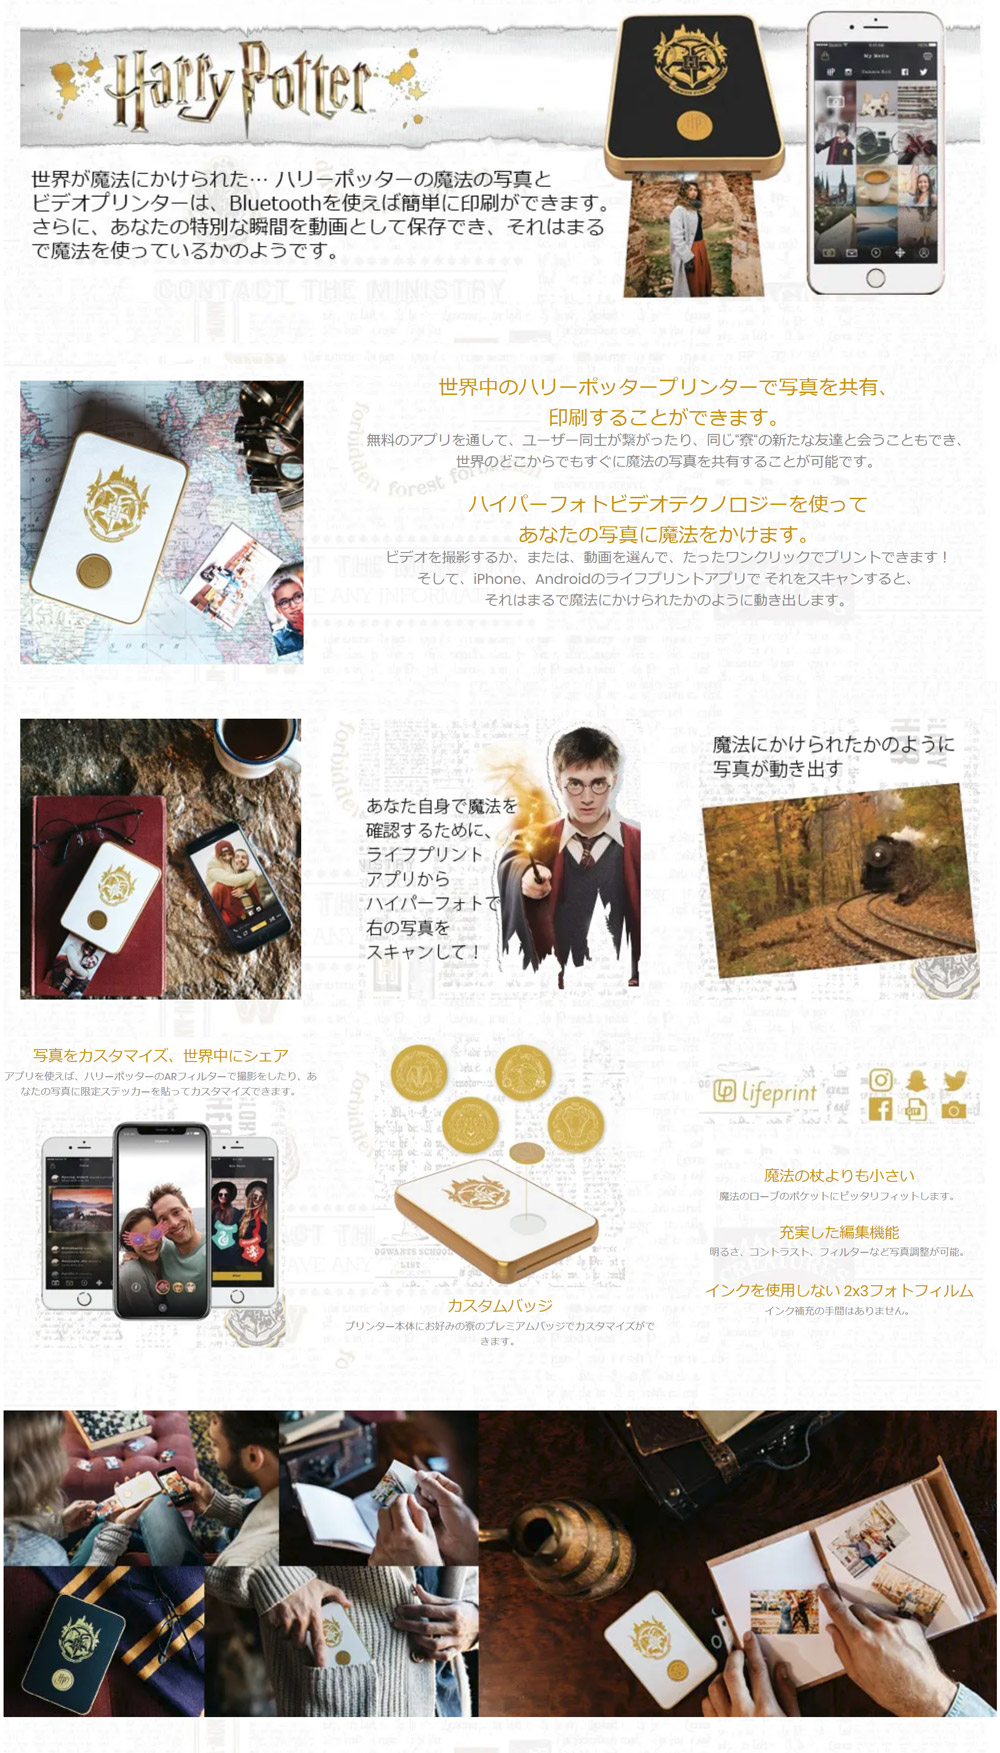 Lifeprint Photos Japan ライフプリント Lifeprint Harry Potter 2 3 Slim Photo Video Printer